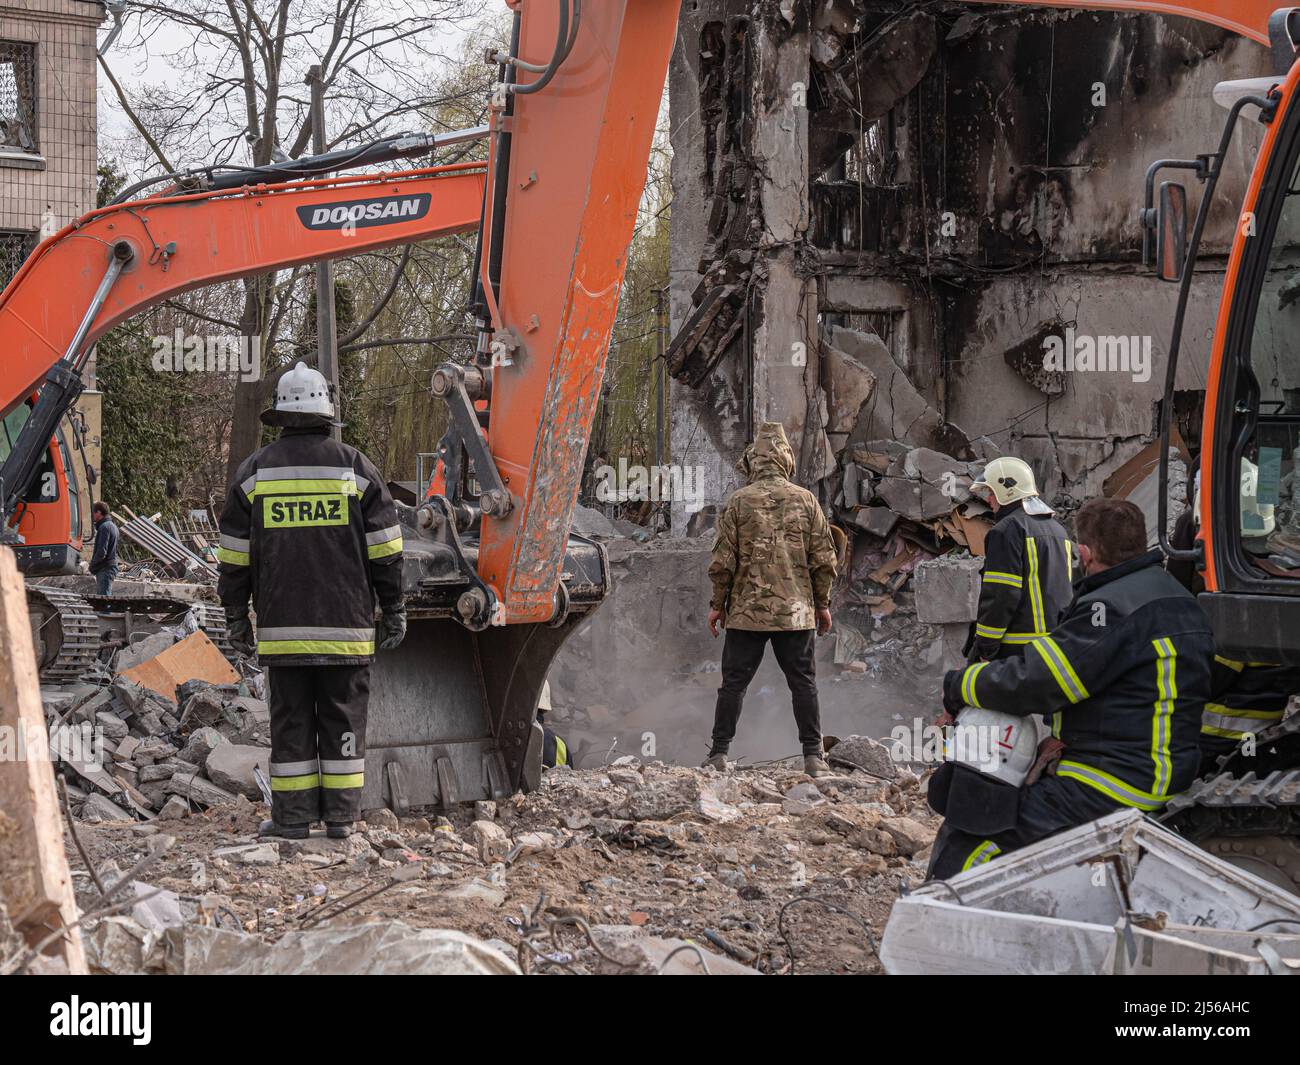 Borodyanka, Ukraine - April 2022: Russian invasion of Ukraine bombed building destroyed city Ukraine ruined. Russia against Ukraine war destruction building damage Mariupol, Kharkov, Bucha destroyed. Stock Photo